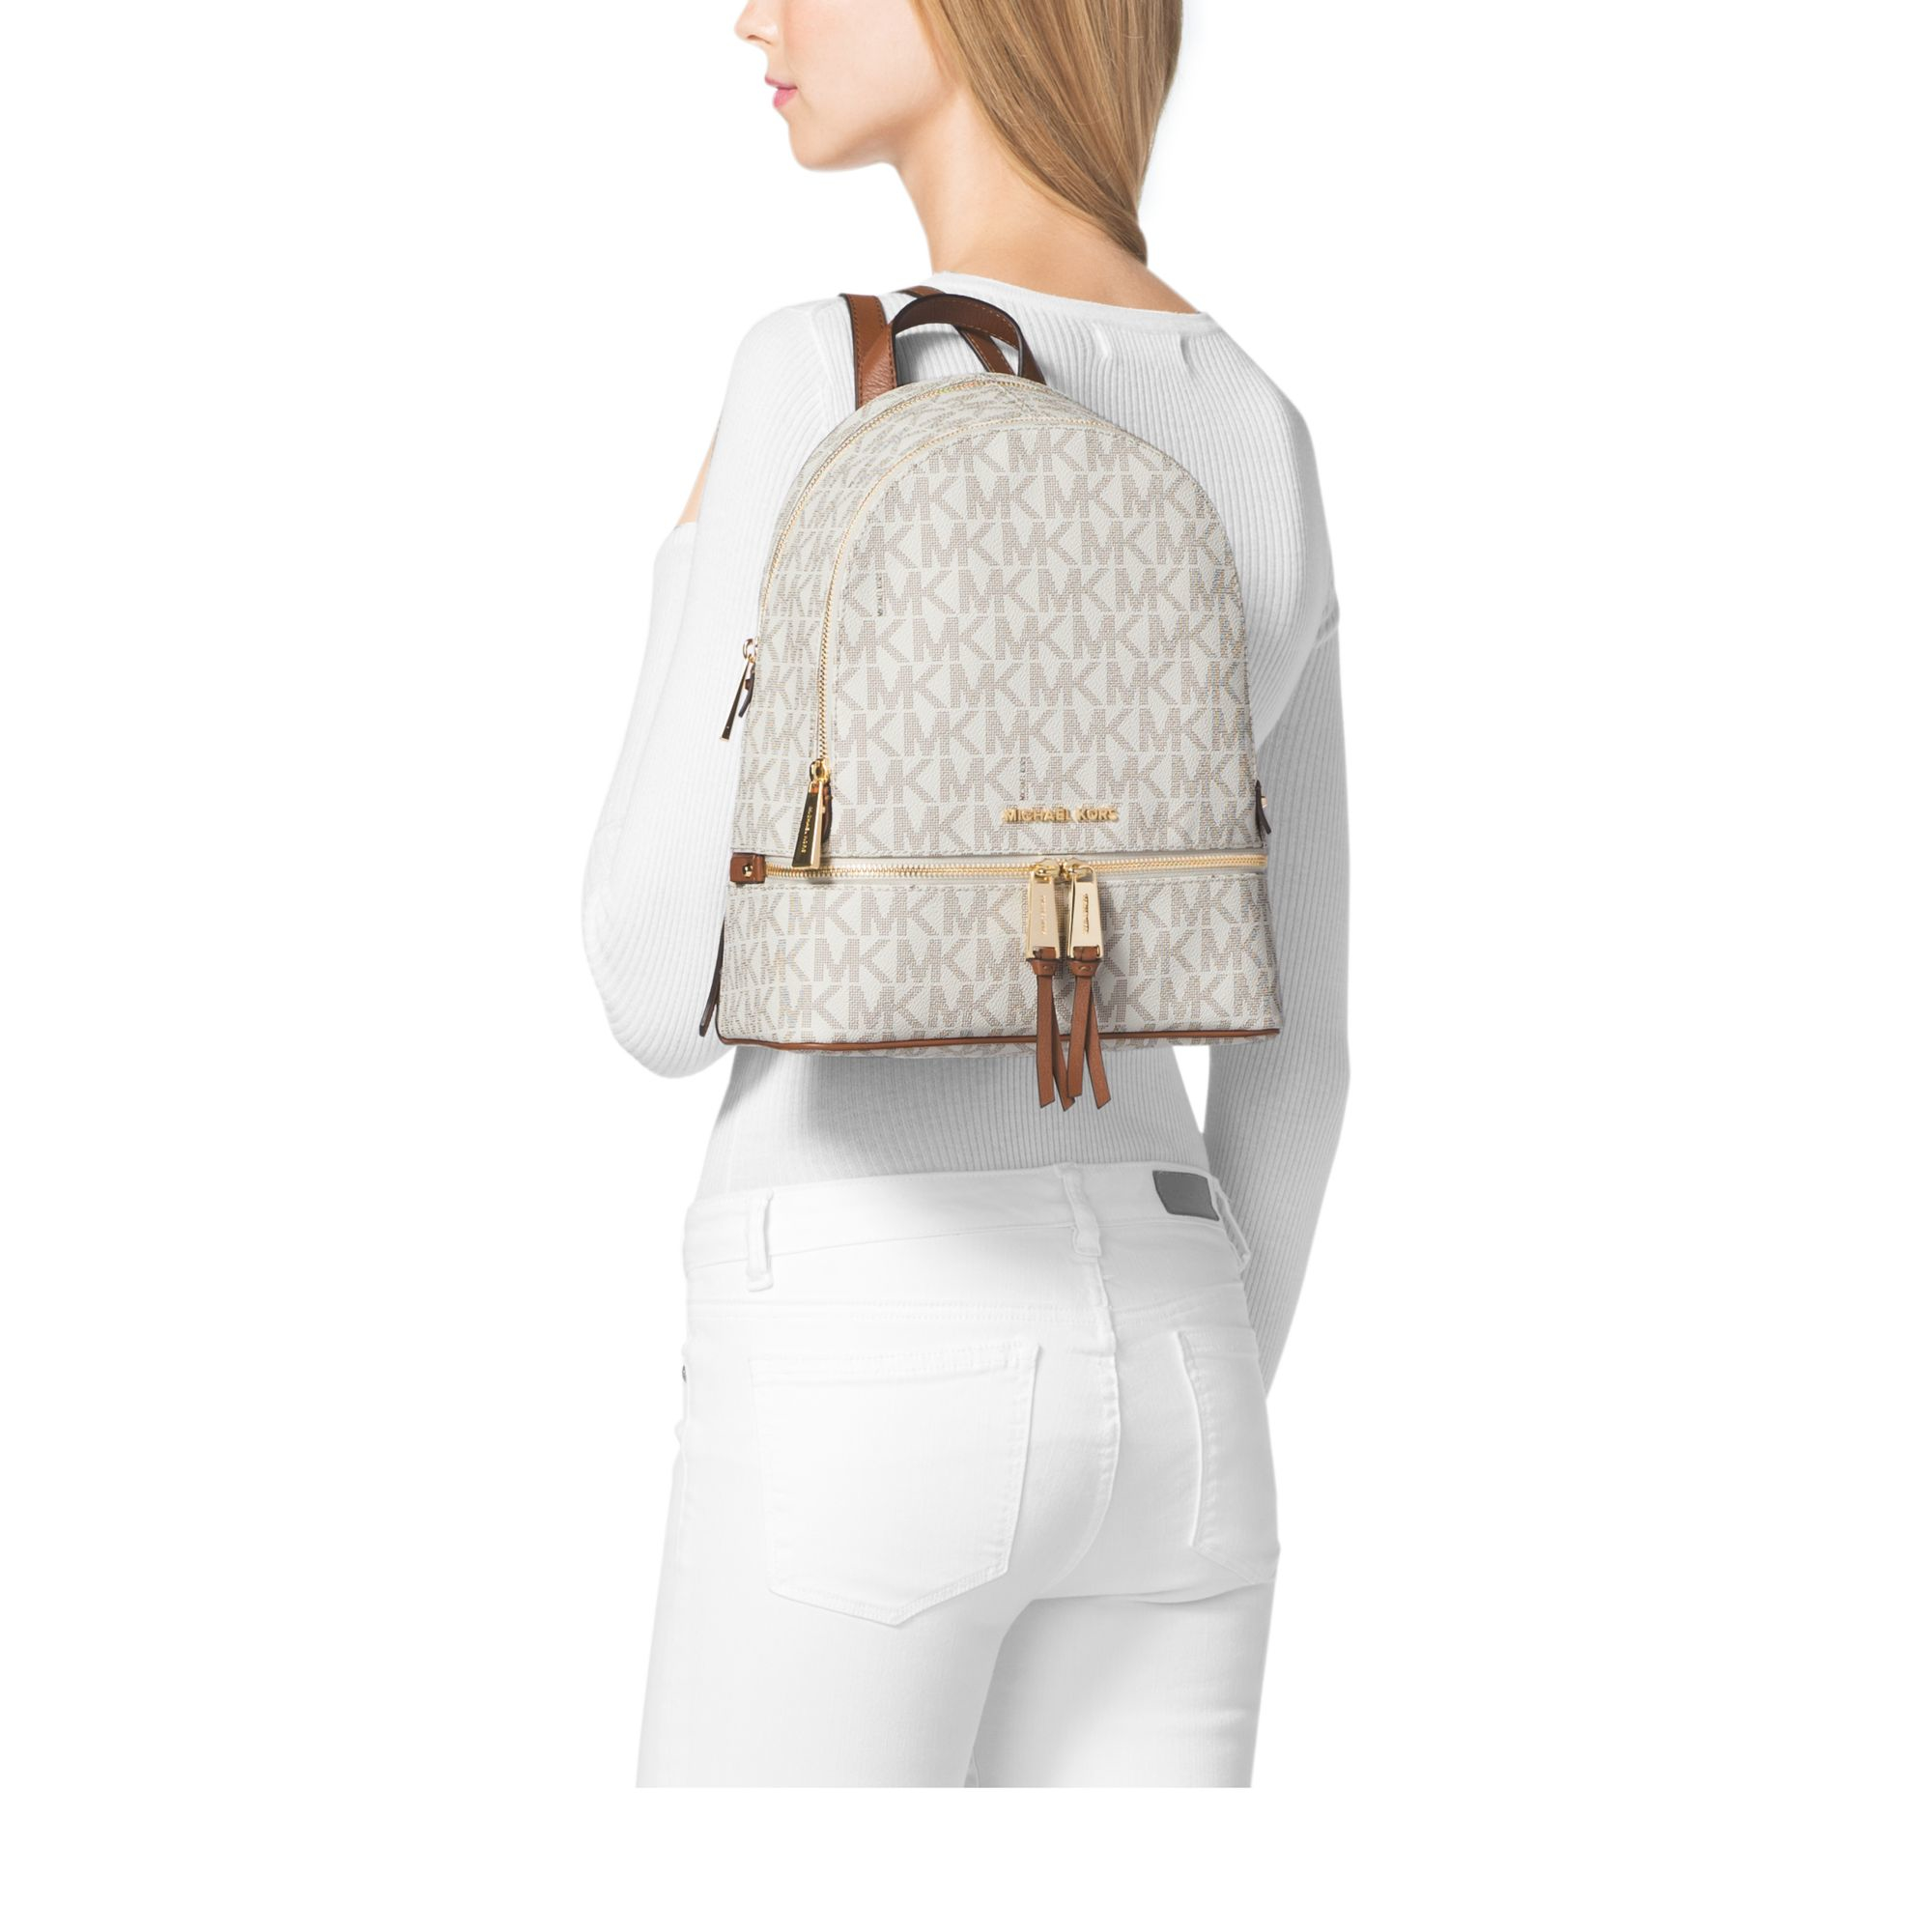 Lyst - Michael Kors Rhea Small Backpack in White